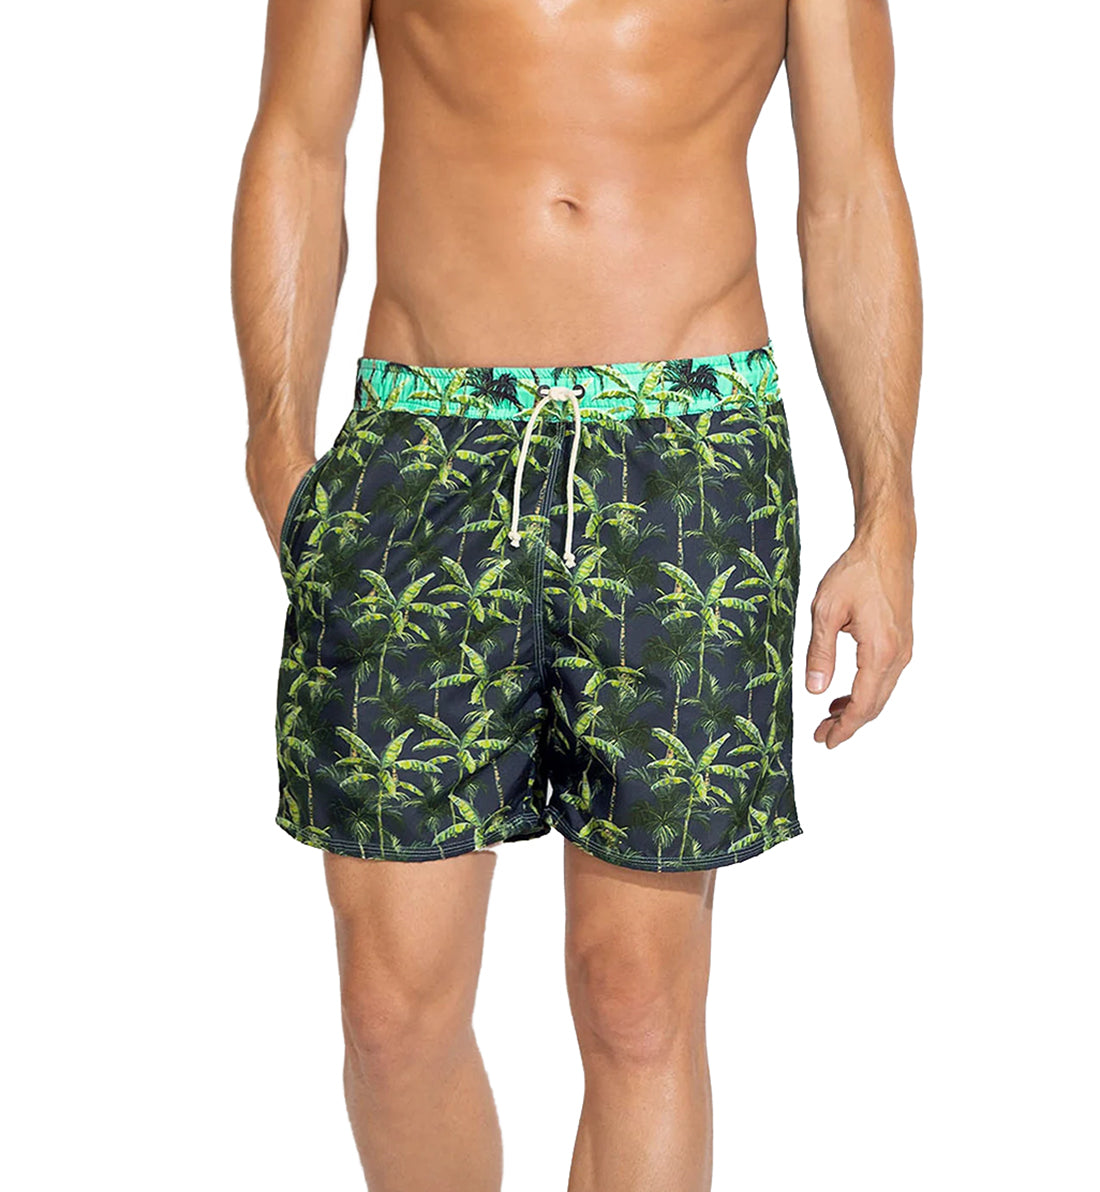 LEO Men's Short Loose Fit Contrast Swim Trunk (505024),Medium,Palm Trees Navy - Palm Trees Navy,Medium